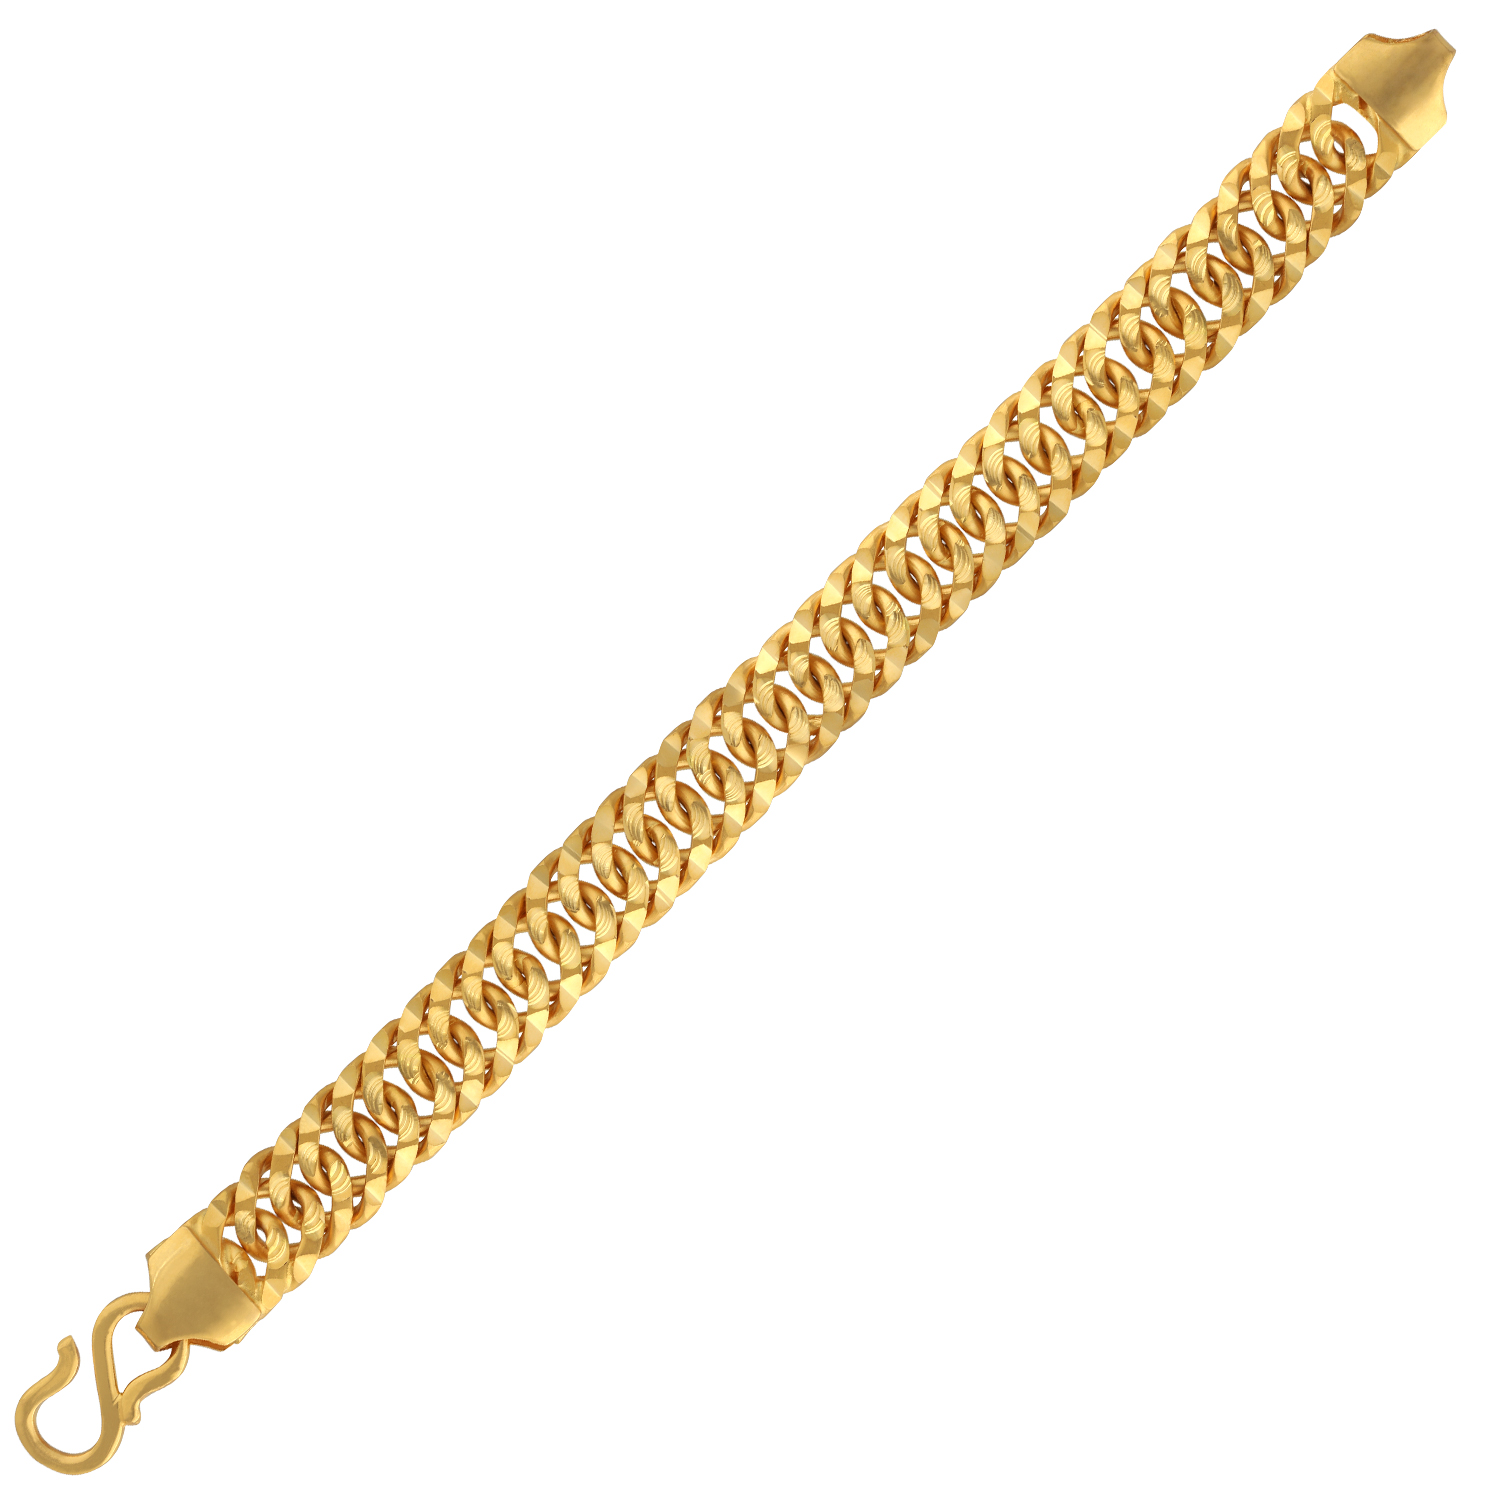 seep aabi jewels 22 karat bis hallmark gold bracelet for man and